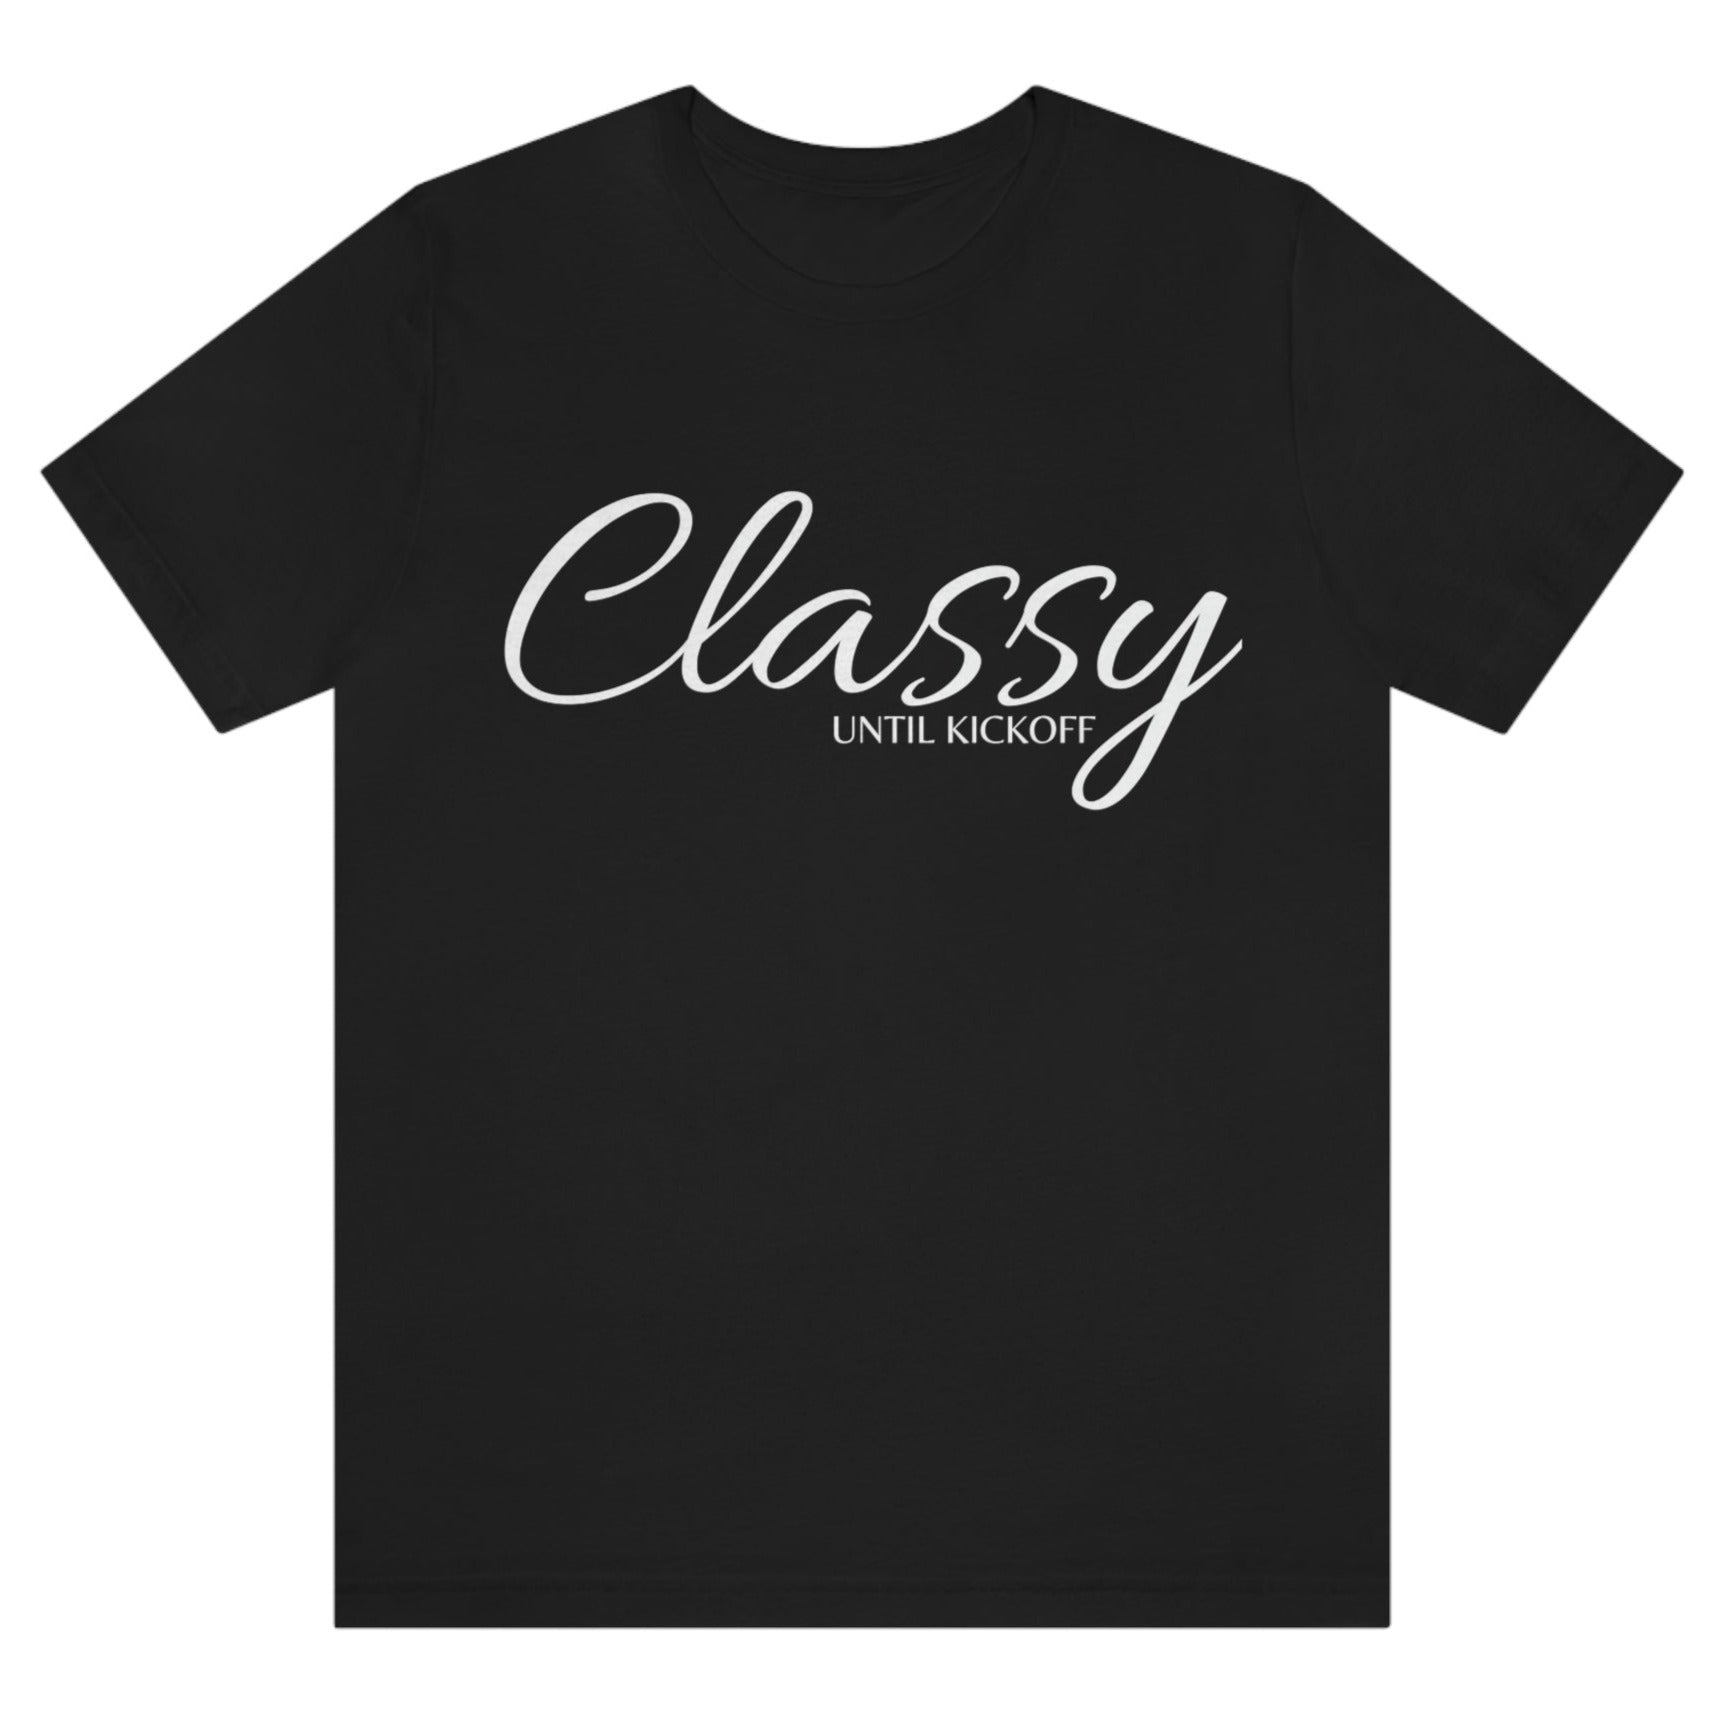 classy-until-kickoff-black-t-shirt-football-soccer-womens